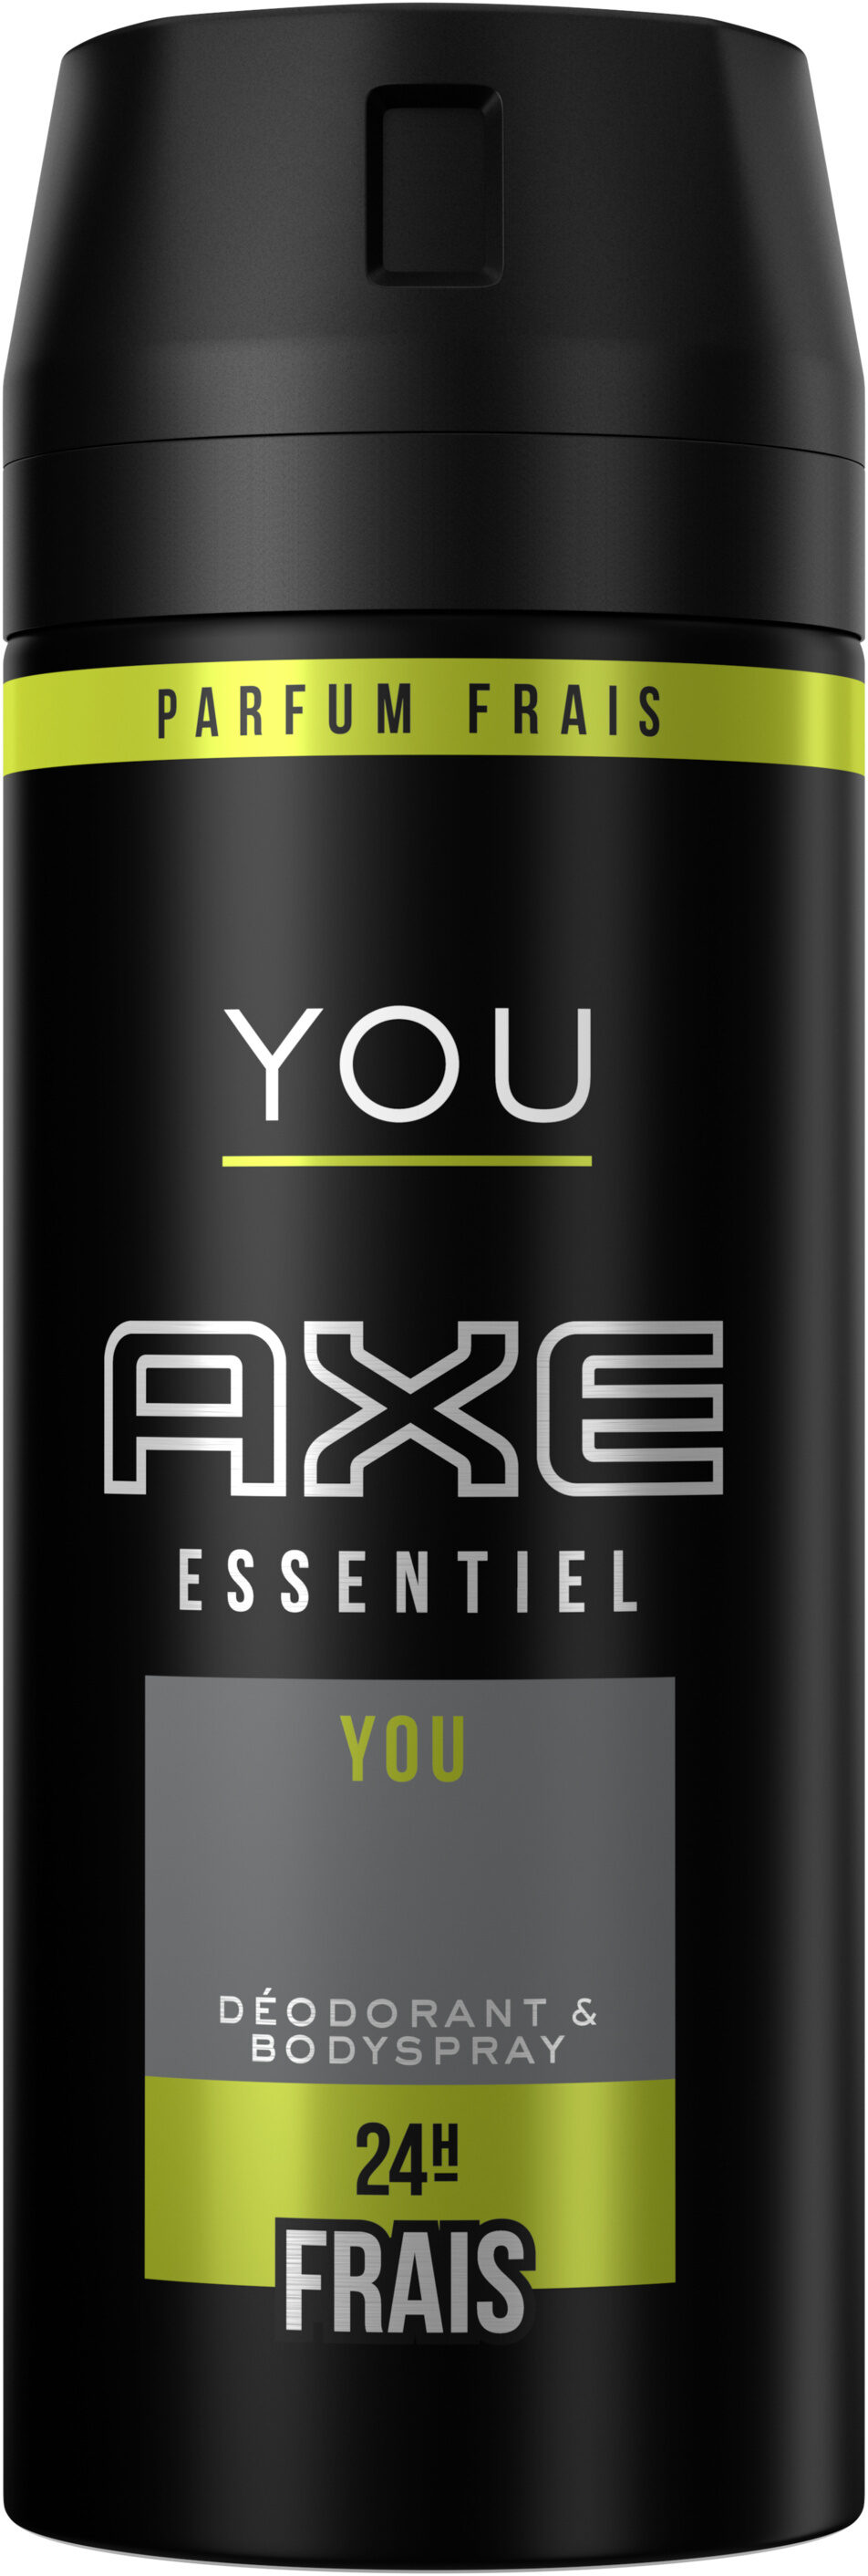 AXE Déodorant Homme You Essentiel Spray - Produit - fr